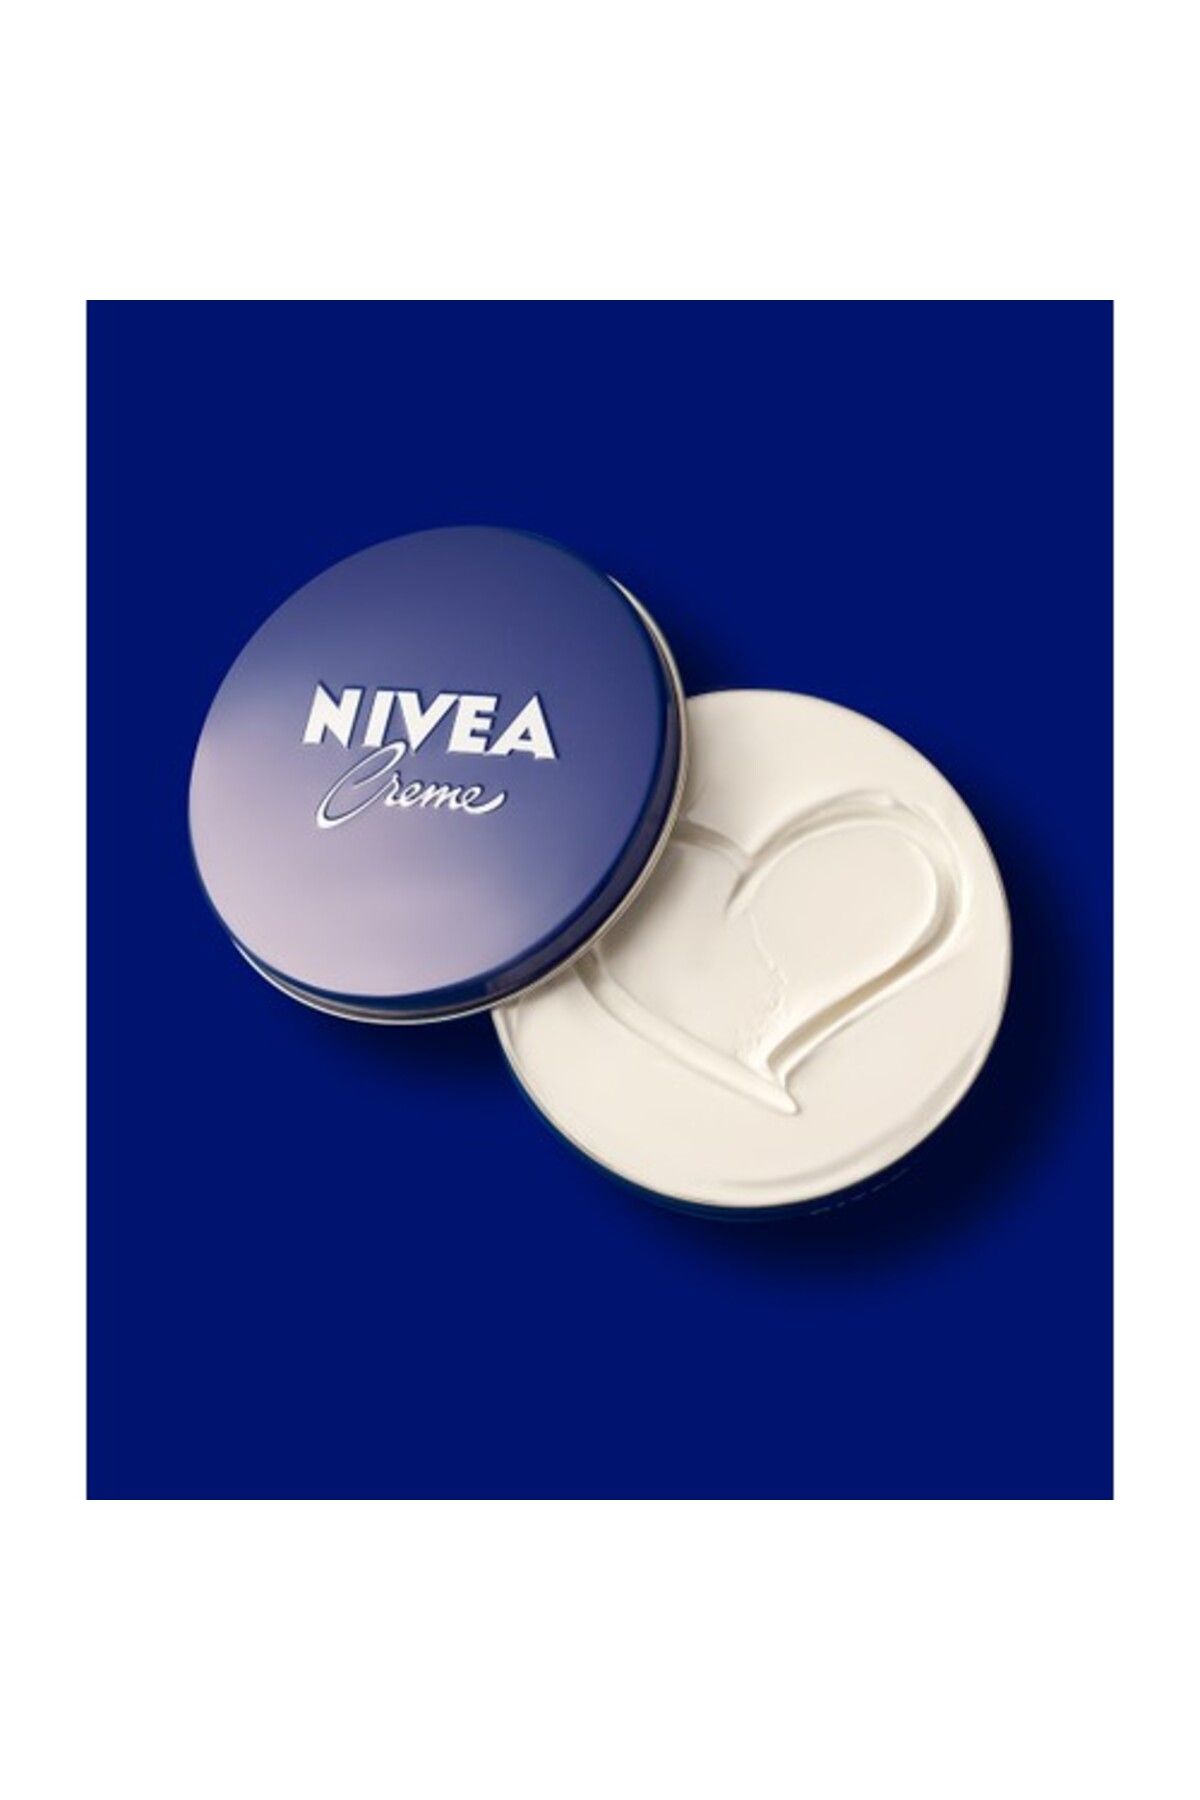 NIVEA کرم مرطوب کننده 30 میلی لیتر، حفاظت نگهداری، کرم مرطوب کننده برای همه انواع پوست